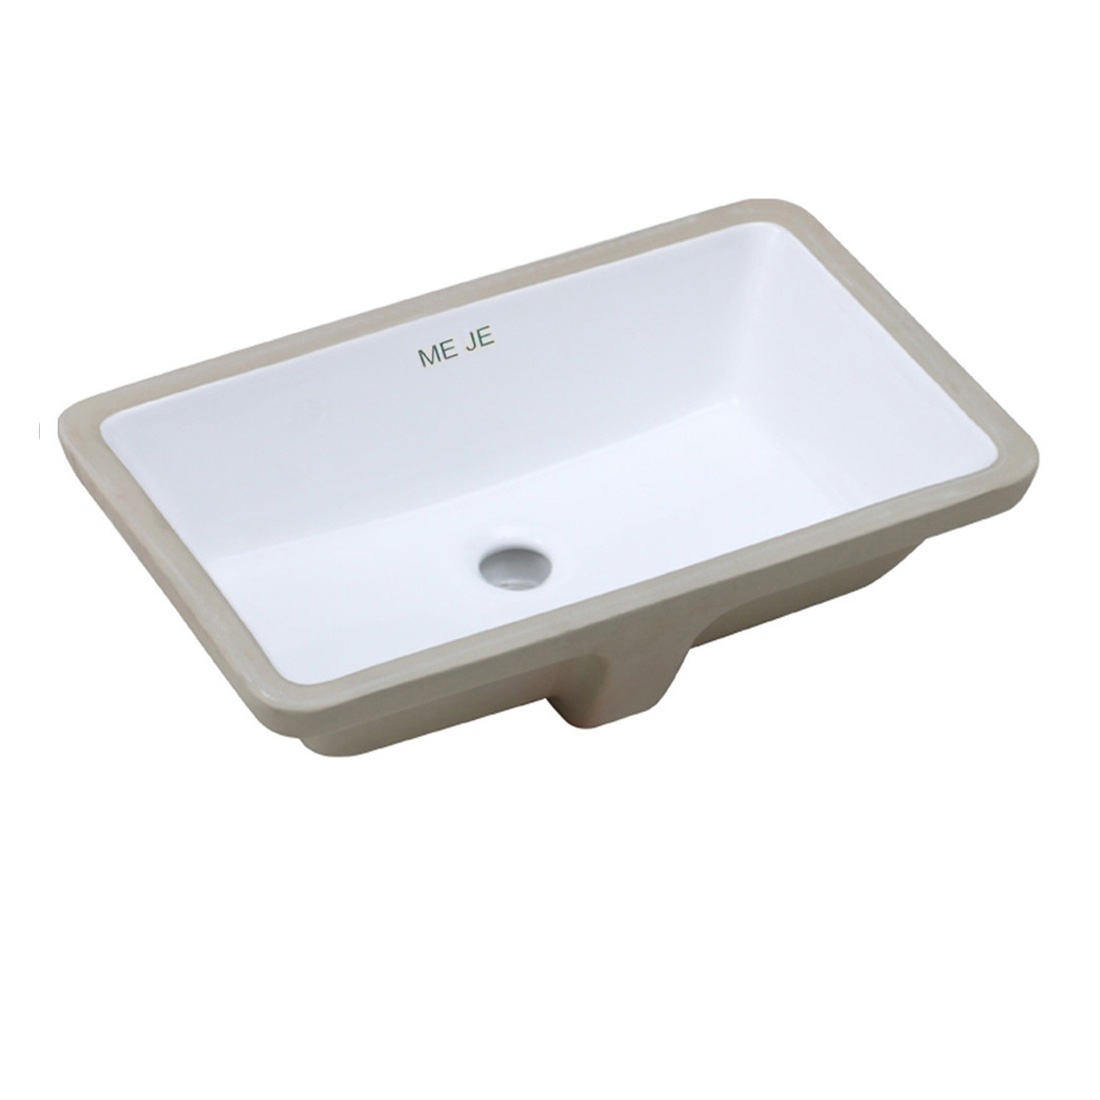 MEJE #202A -20.9 Inch Undermount Sink, Rectrangle Undercounter Bathroom Sink,Ceramic Lavatory Vanity Vessel Sink- White